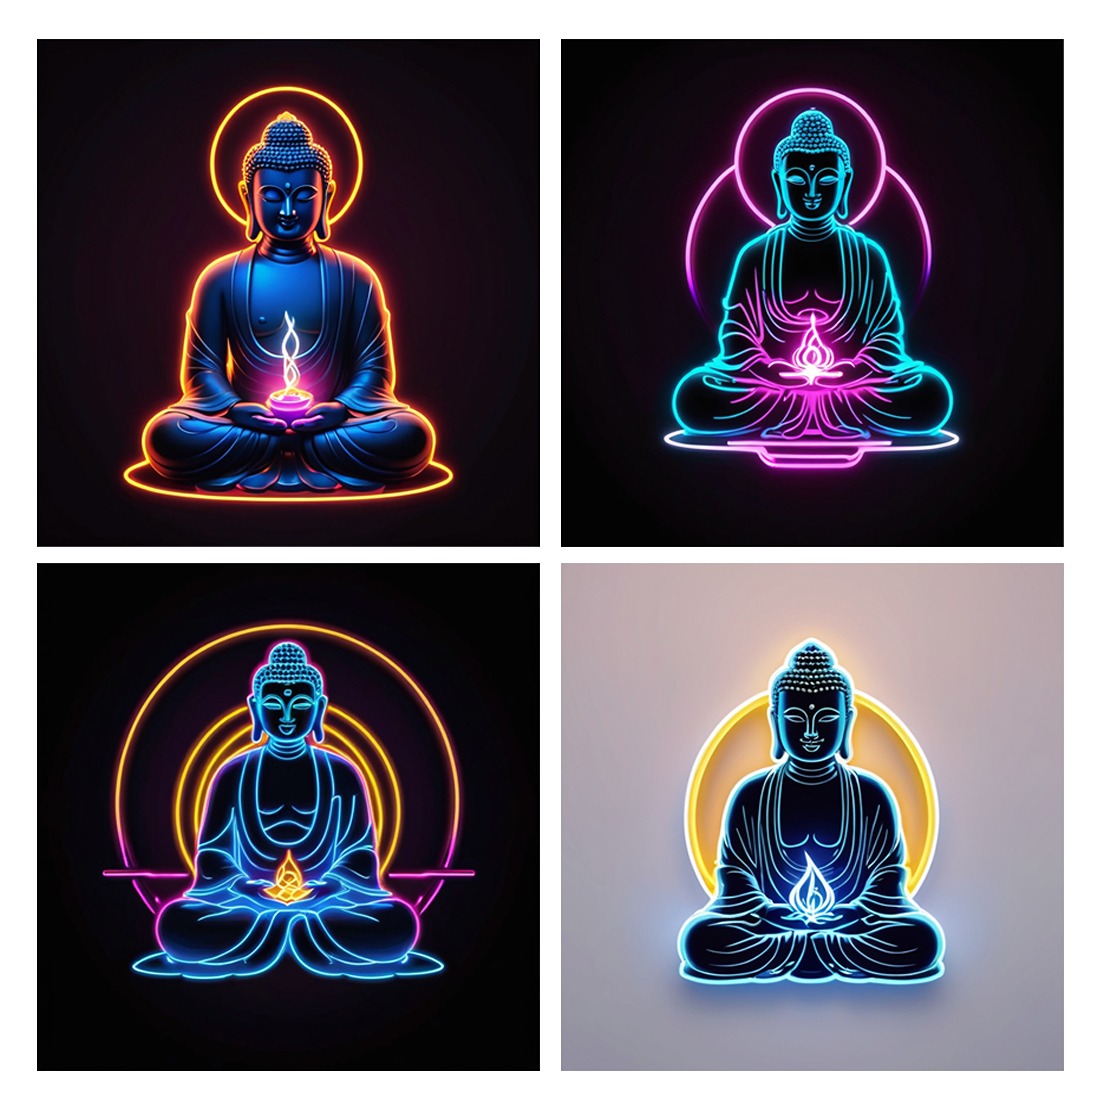 Buddha Logo Stock Photos and Images - 123RF